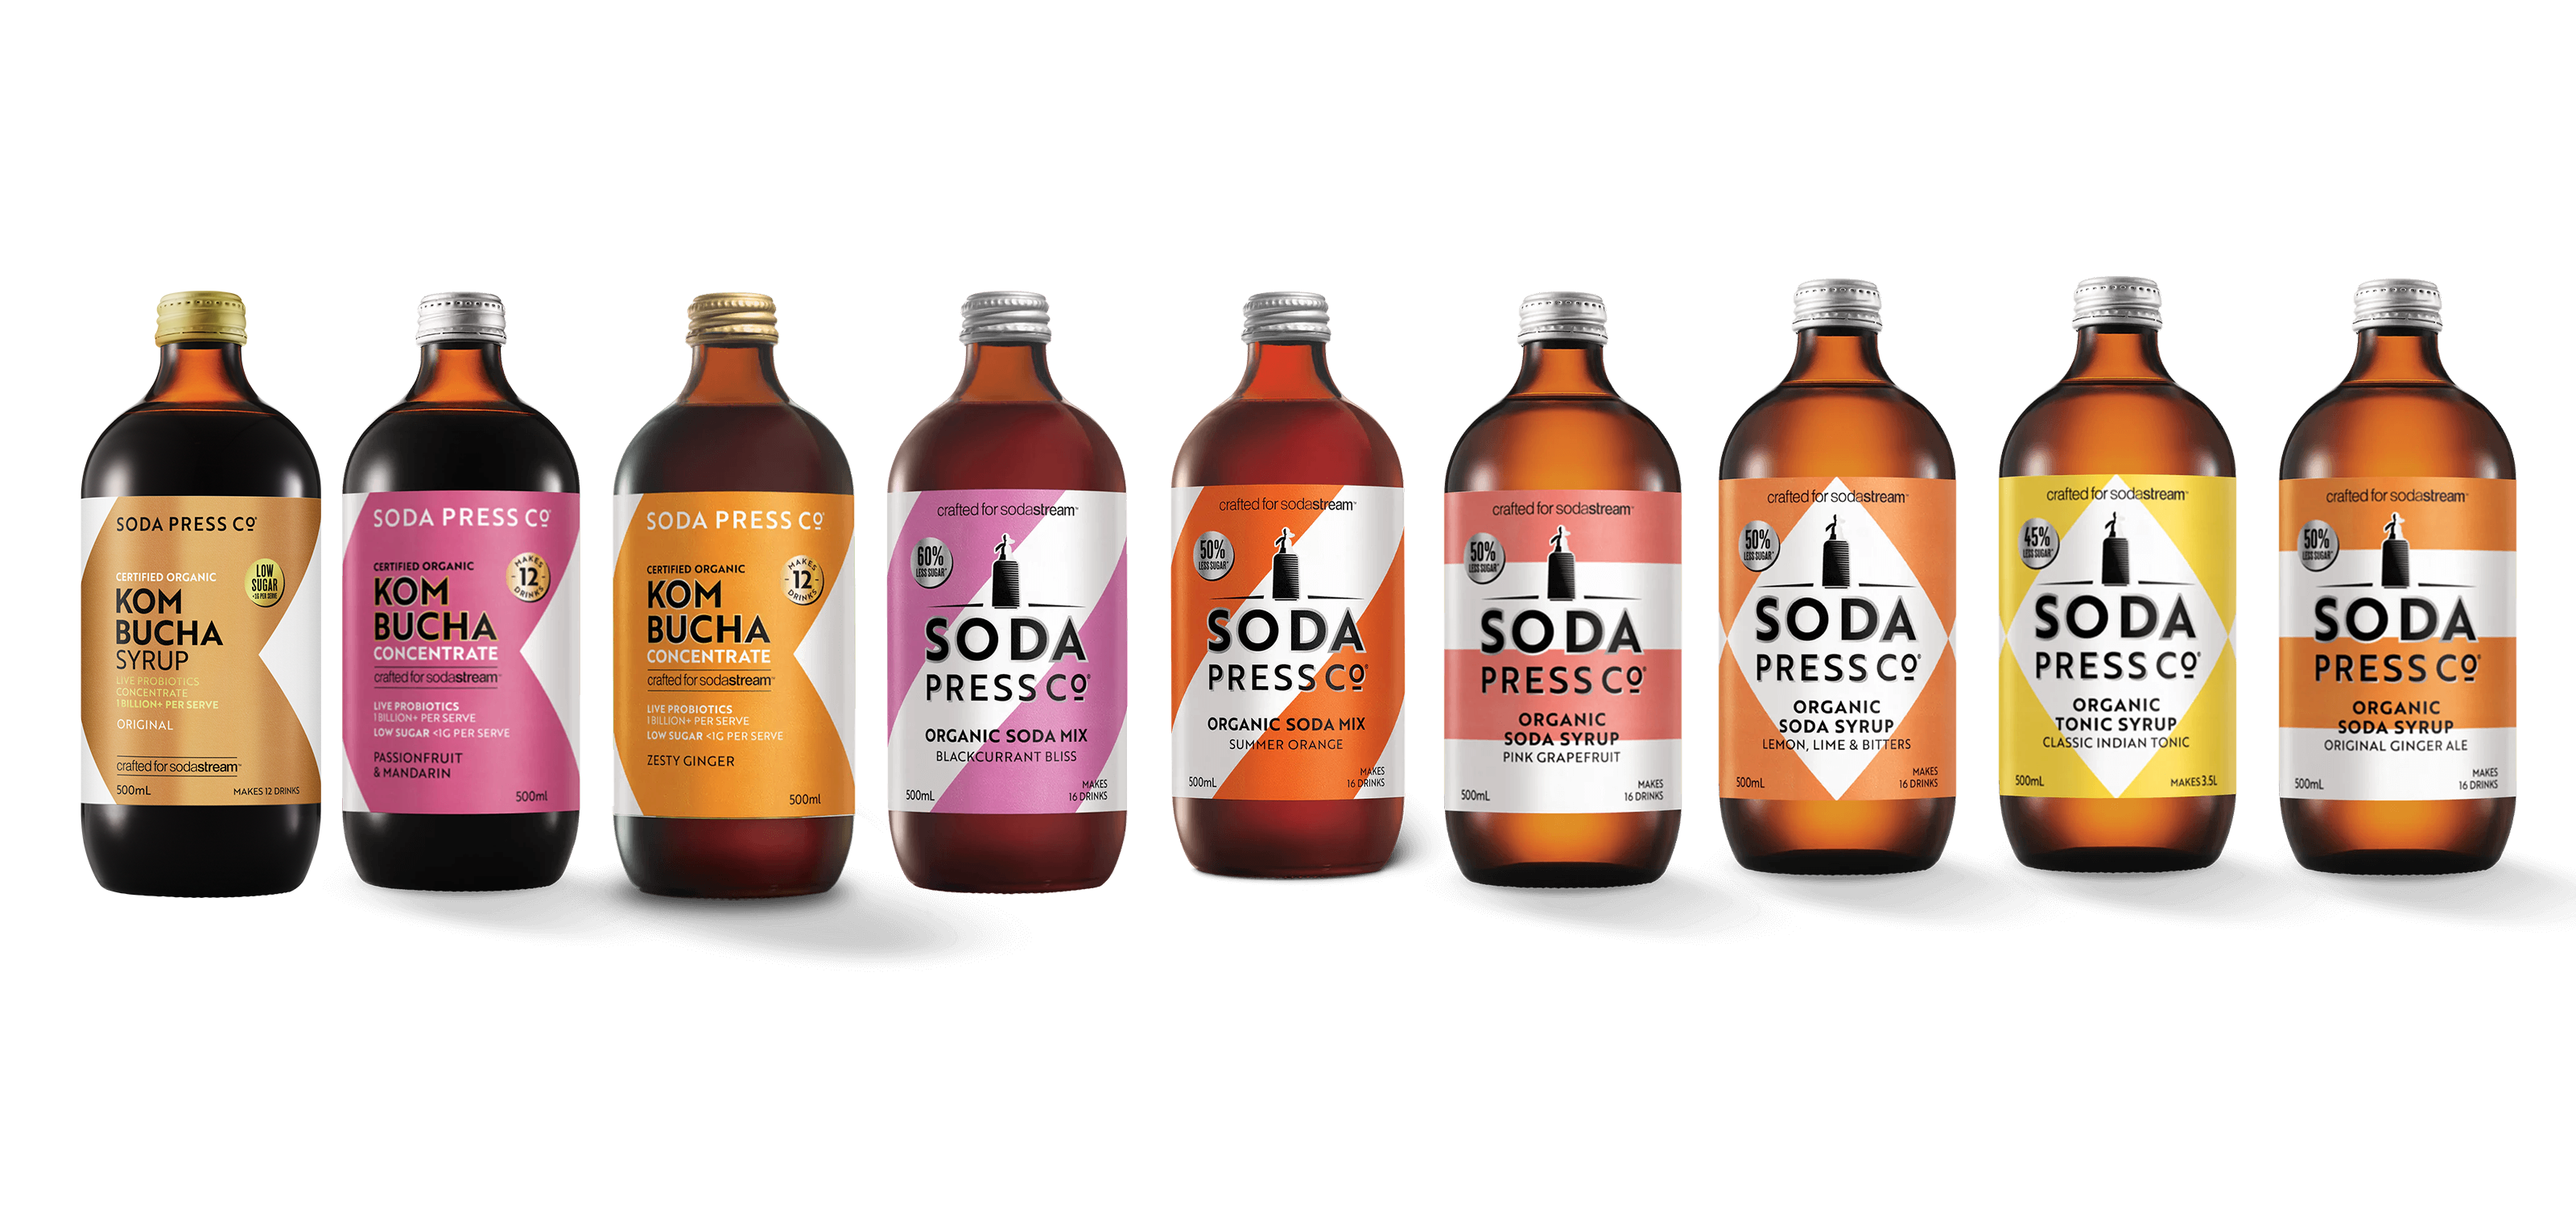 Sodastream Soda Press Co